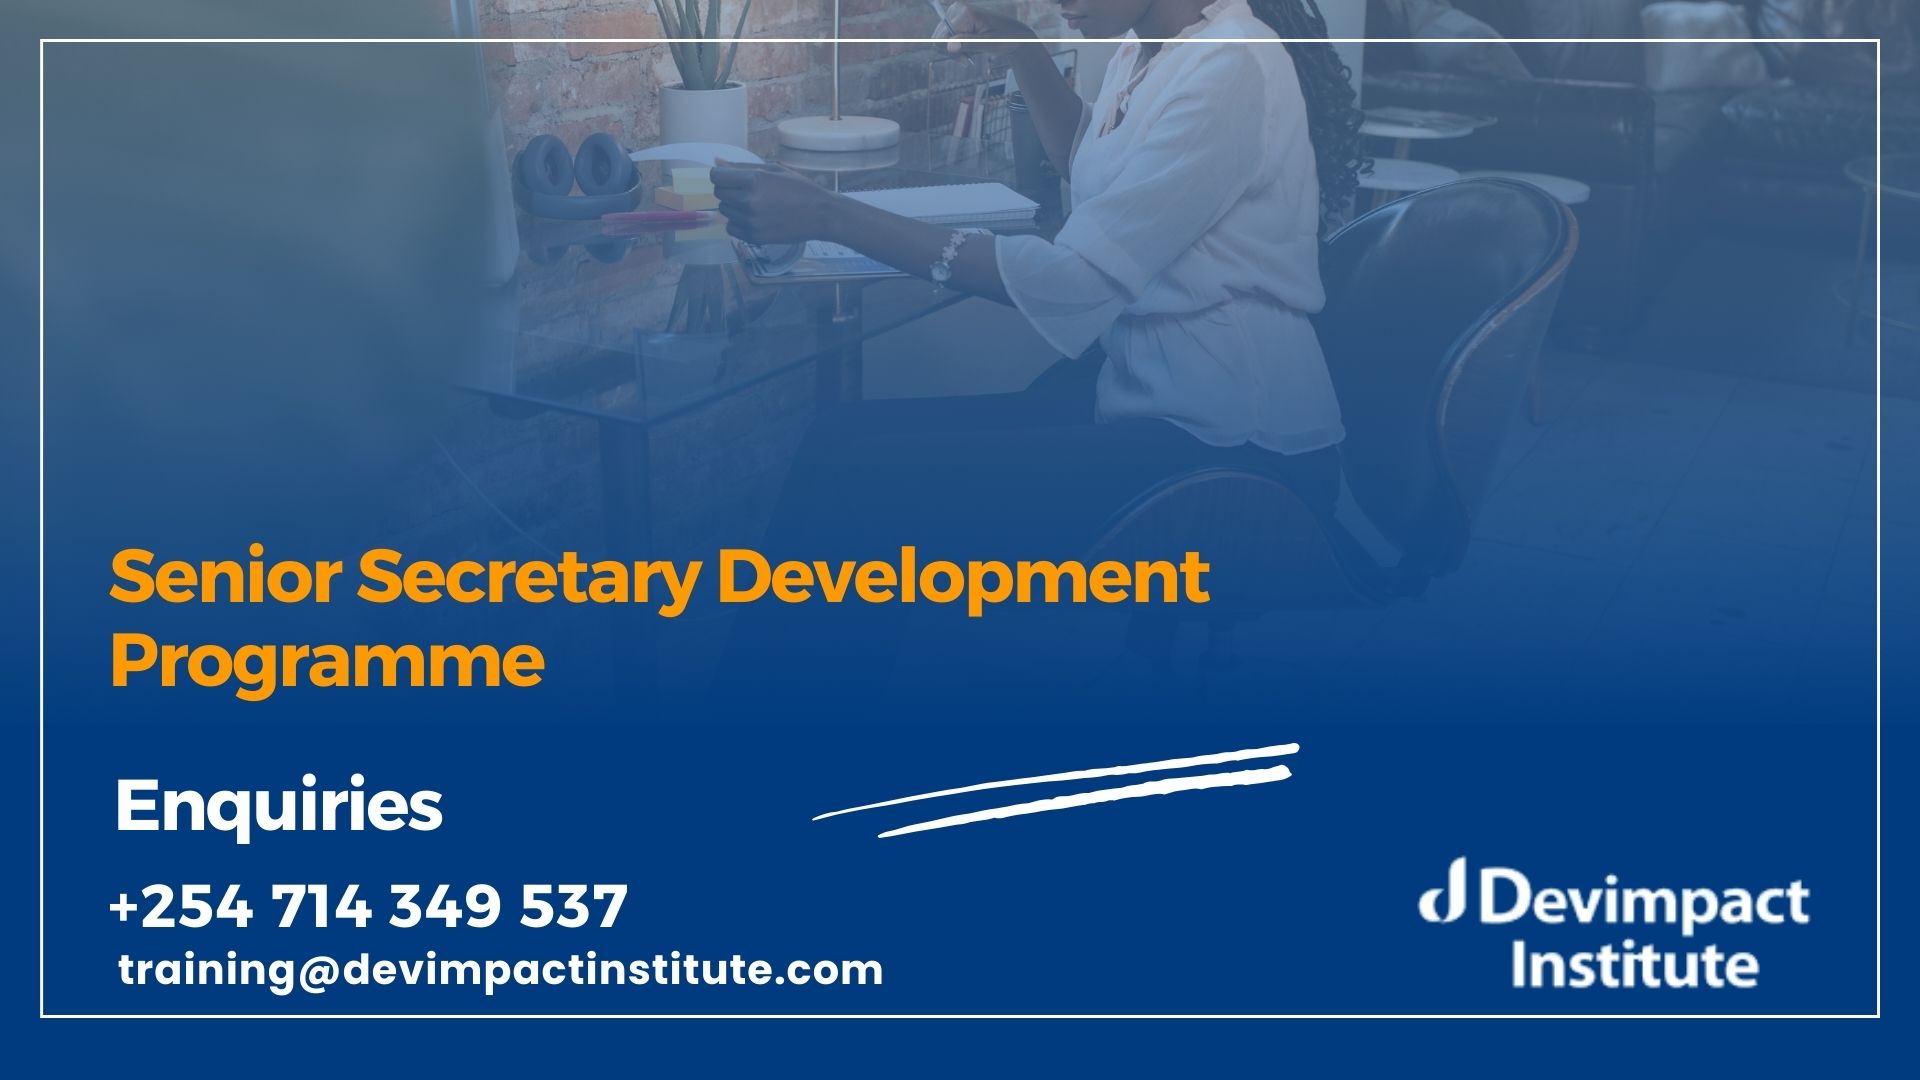 Senior Secretary Development Programme, Devimpact Institute, Nairobi, Kenya